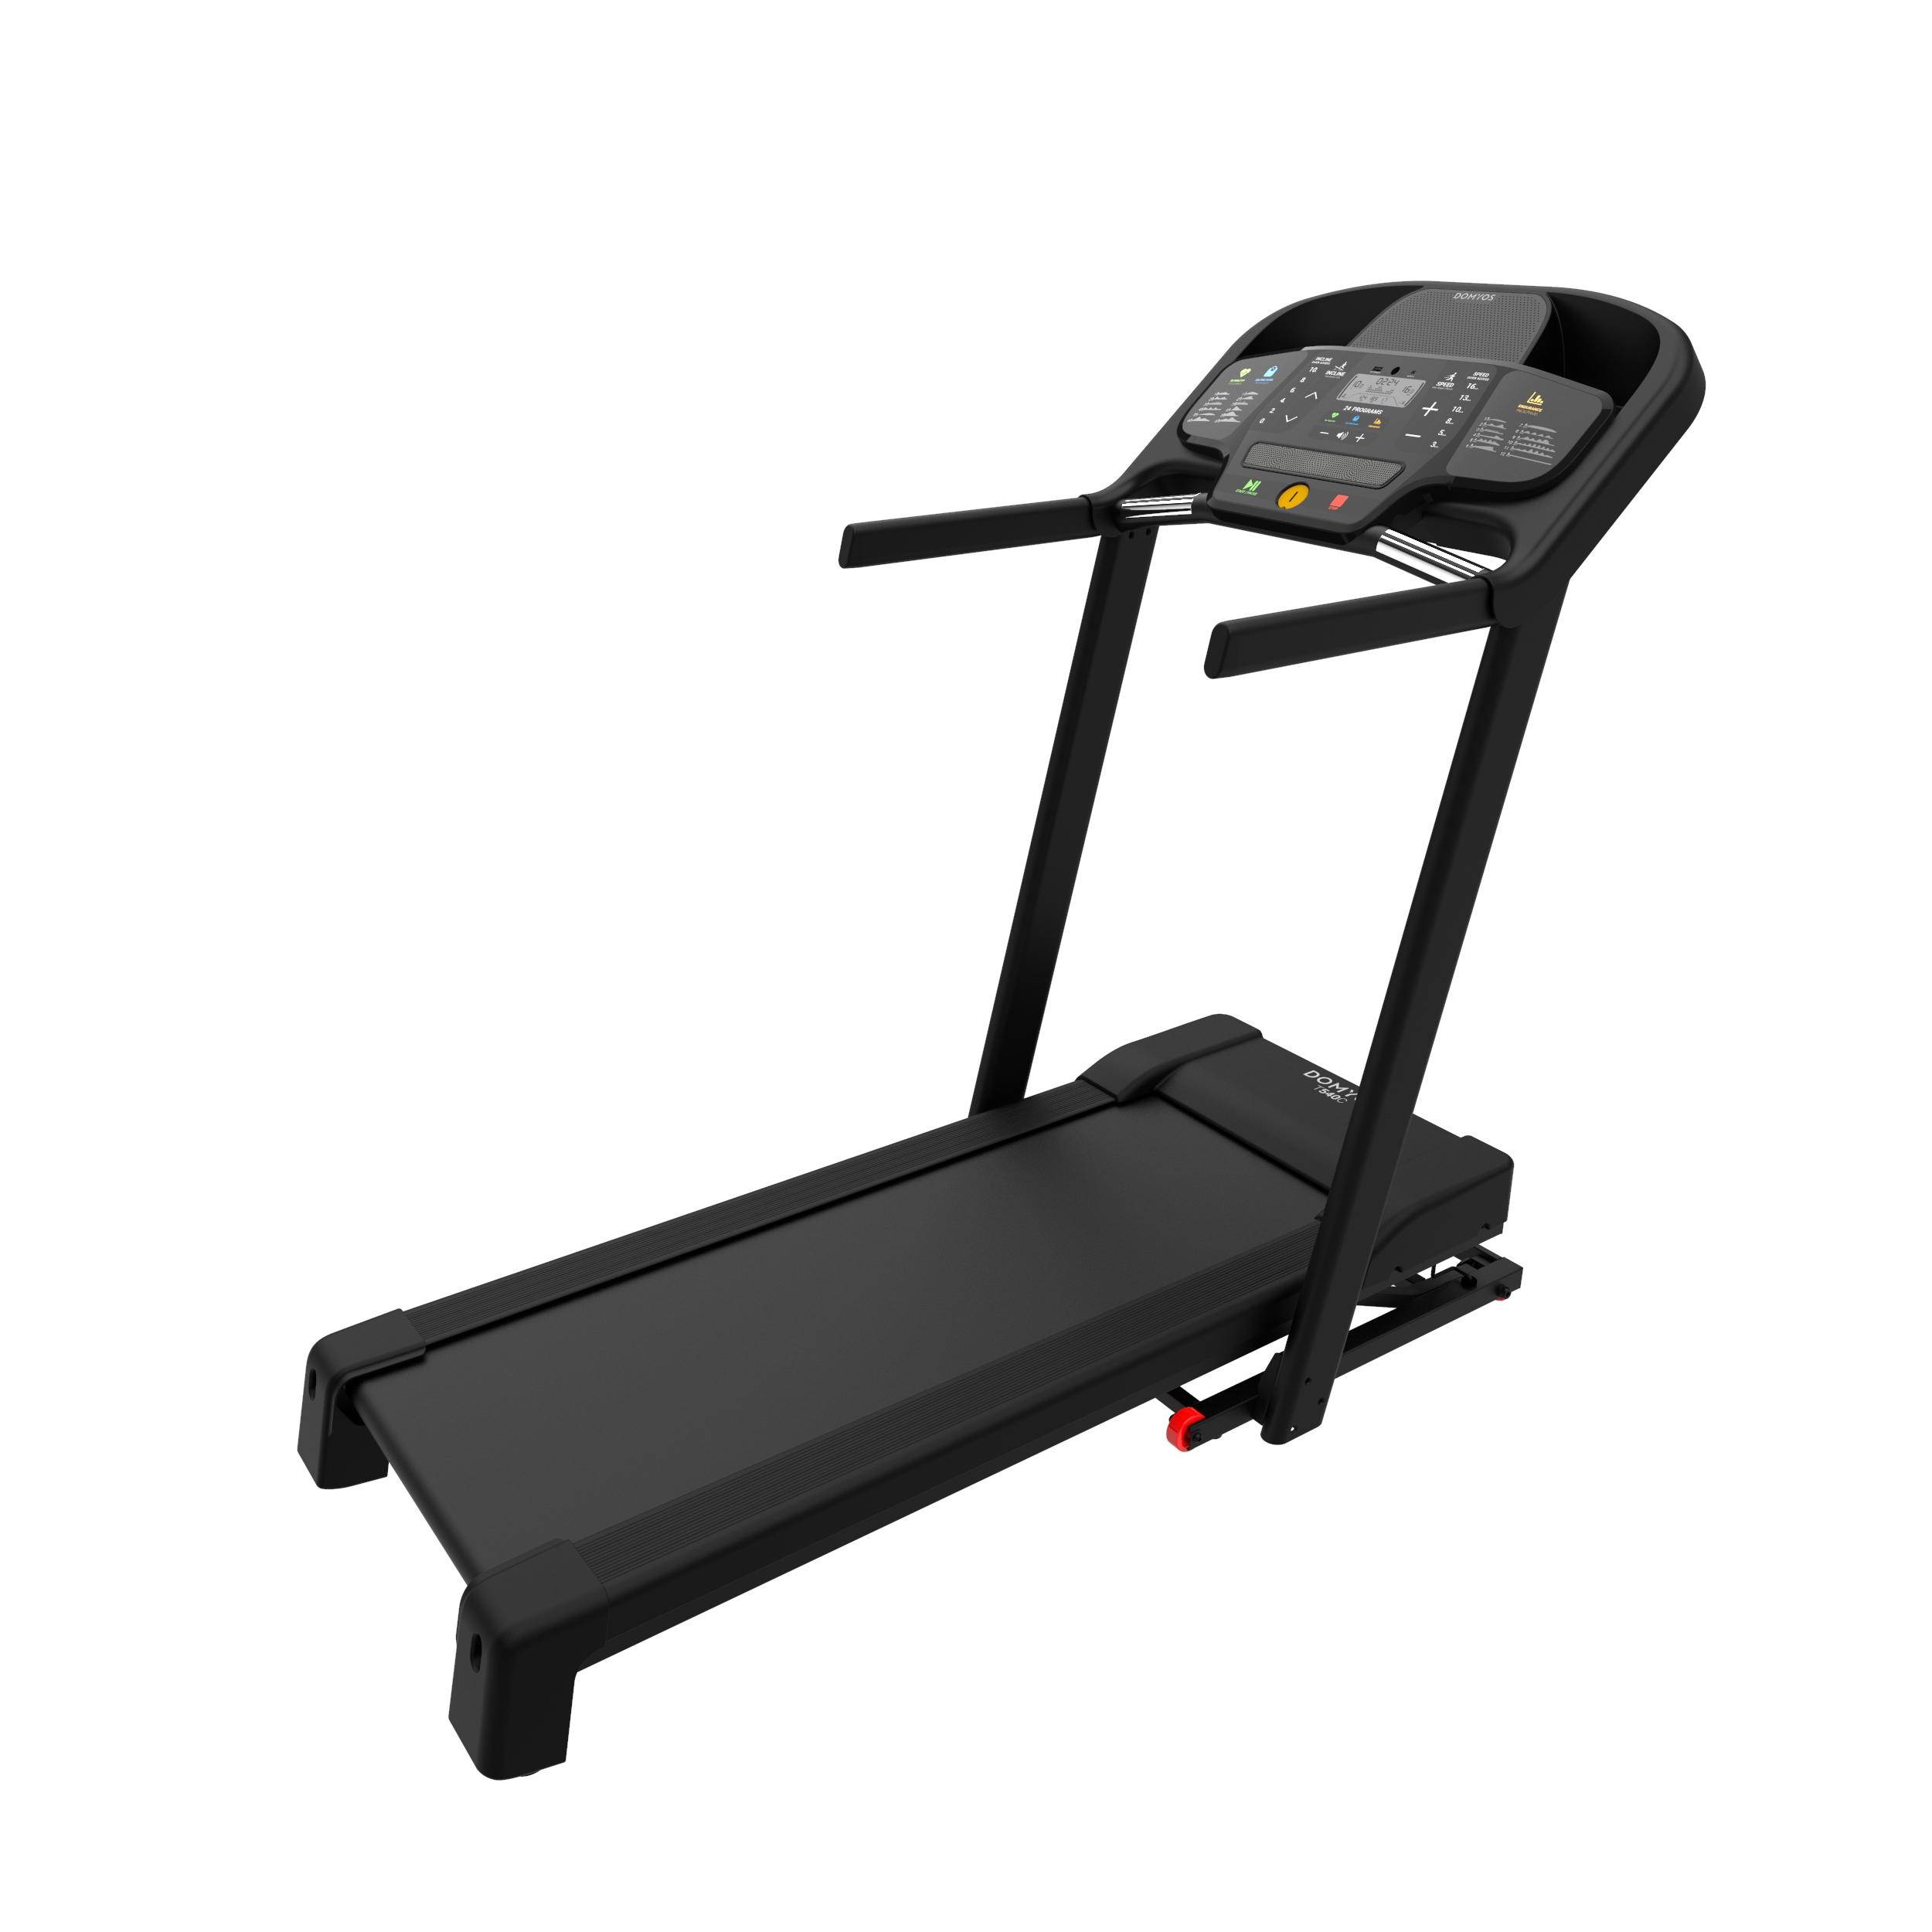 treadmill price in decathlon